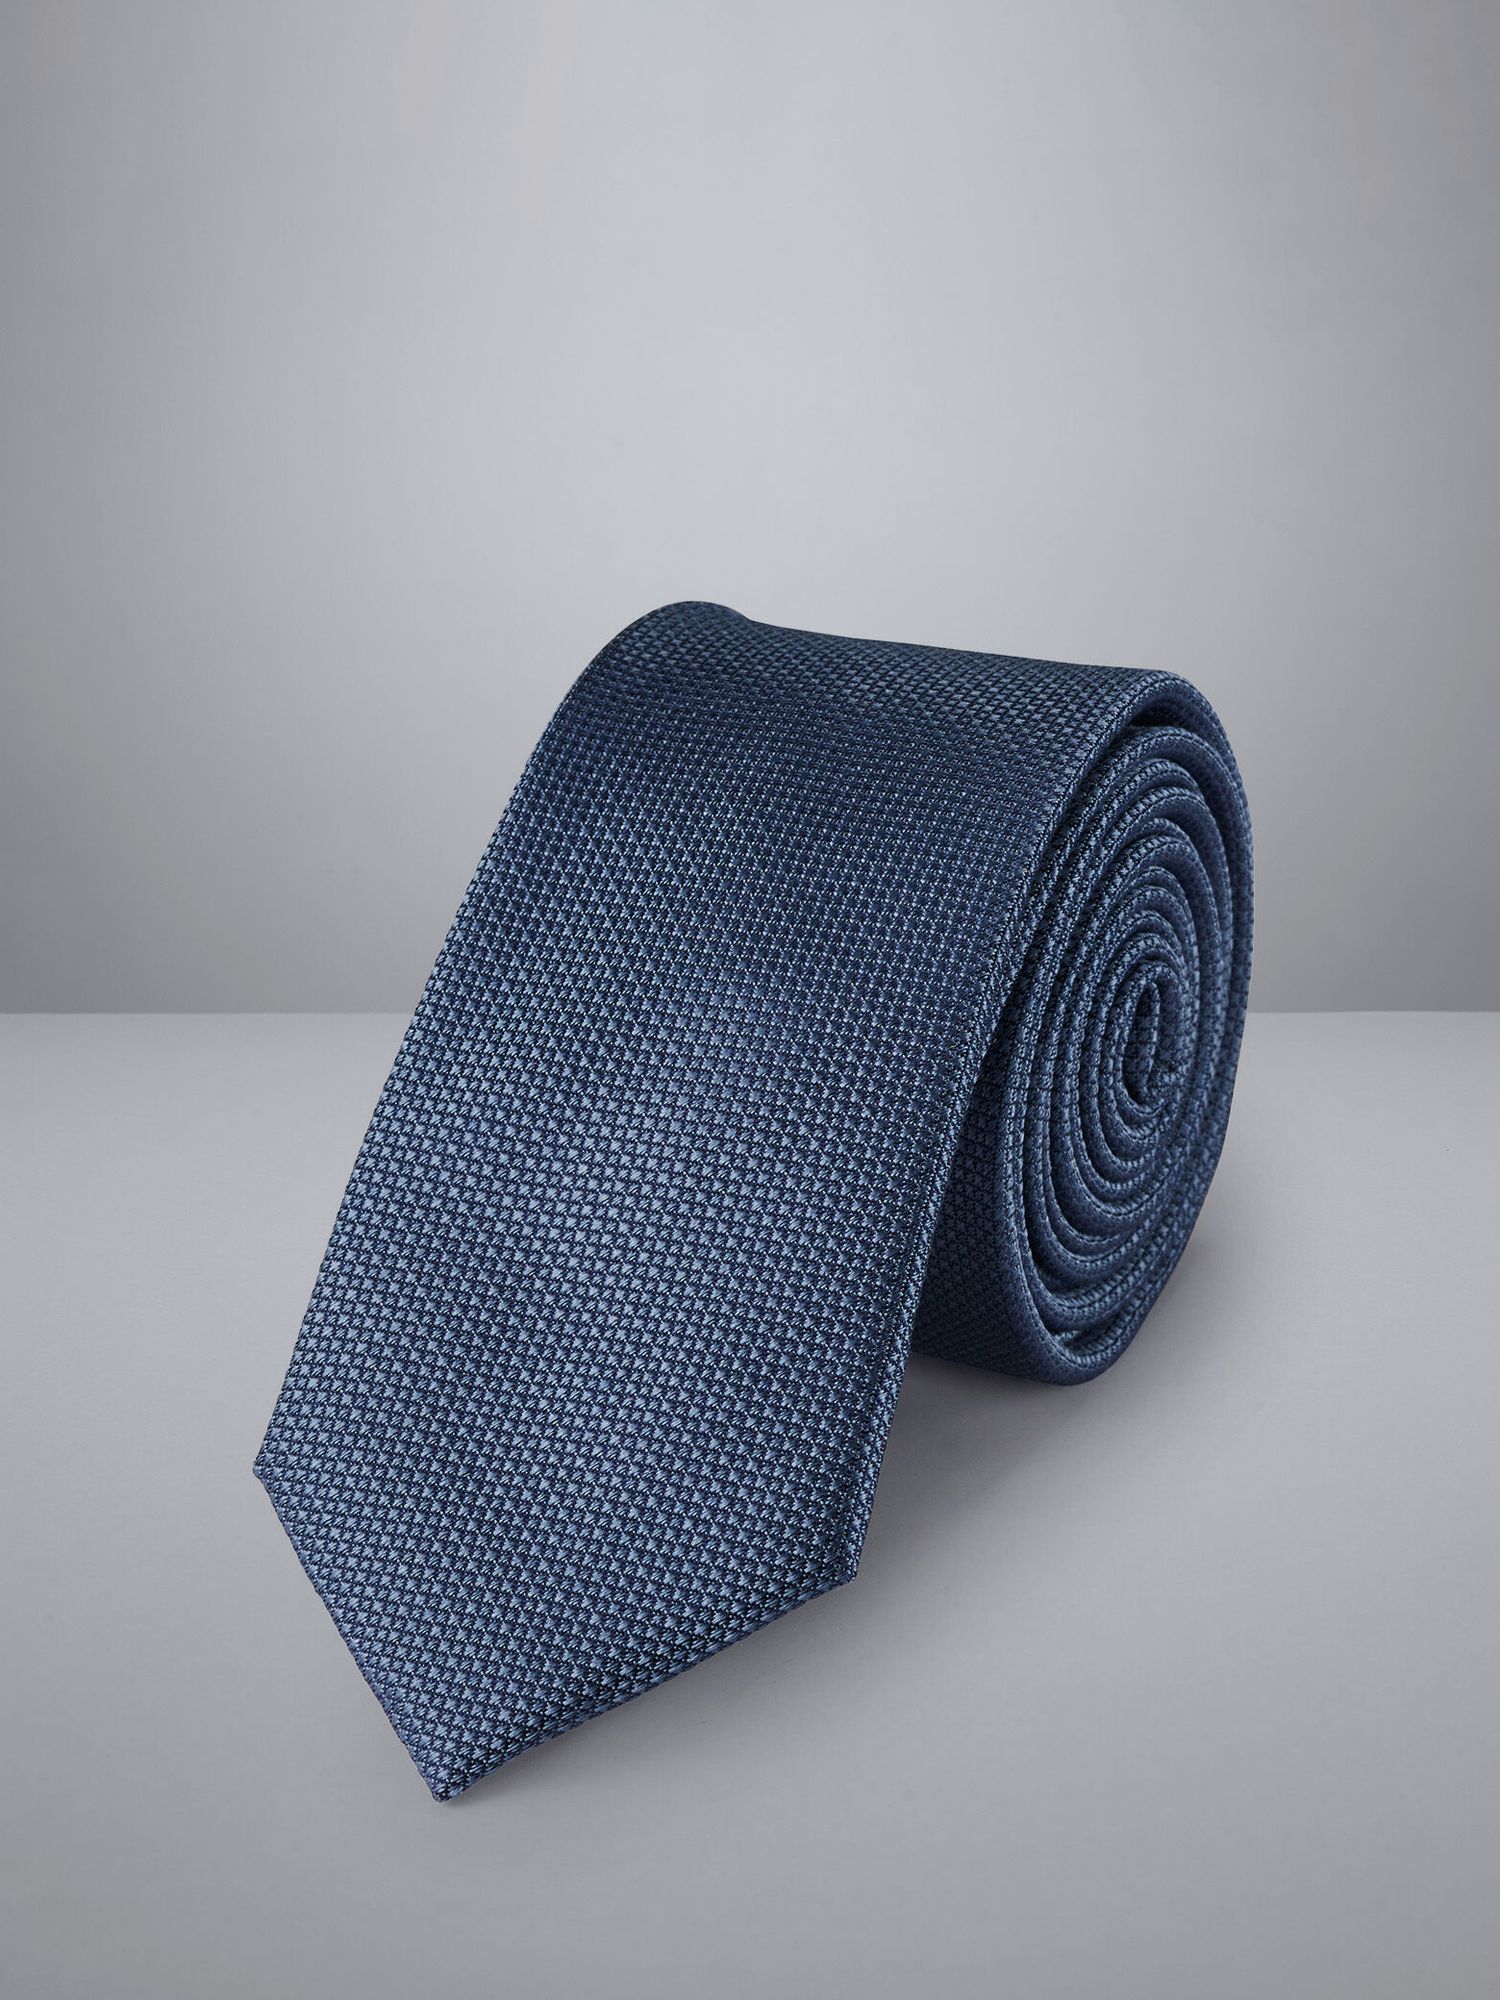 Charles Tyrwhitt Stain Resistant Textured Silk Tie, Steel Blue, One Size